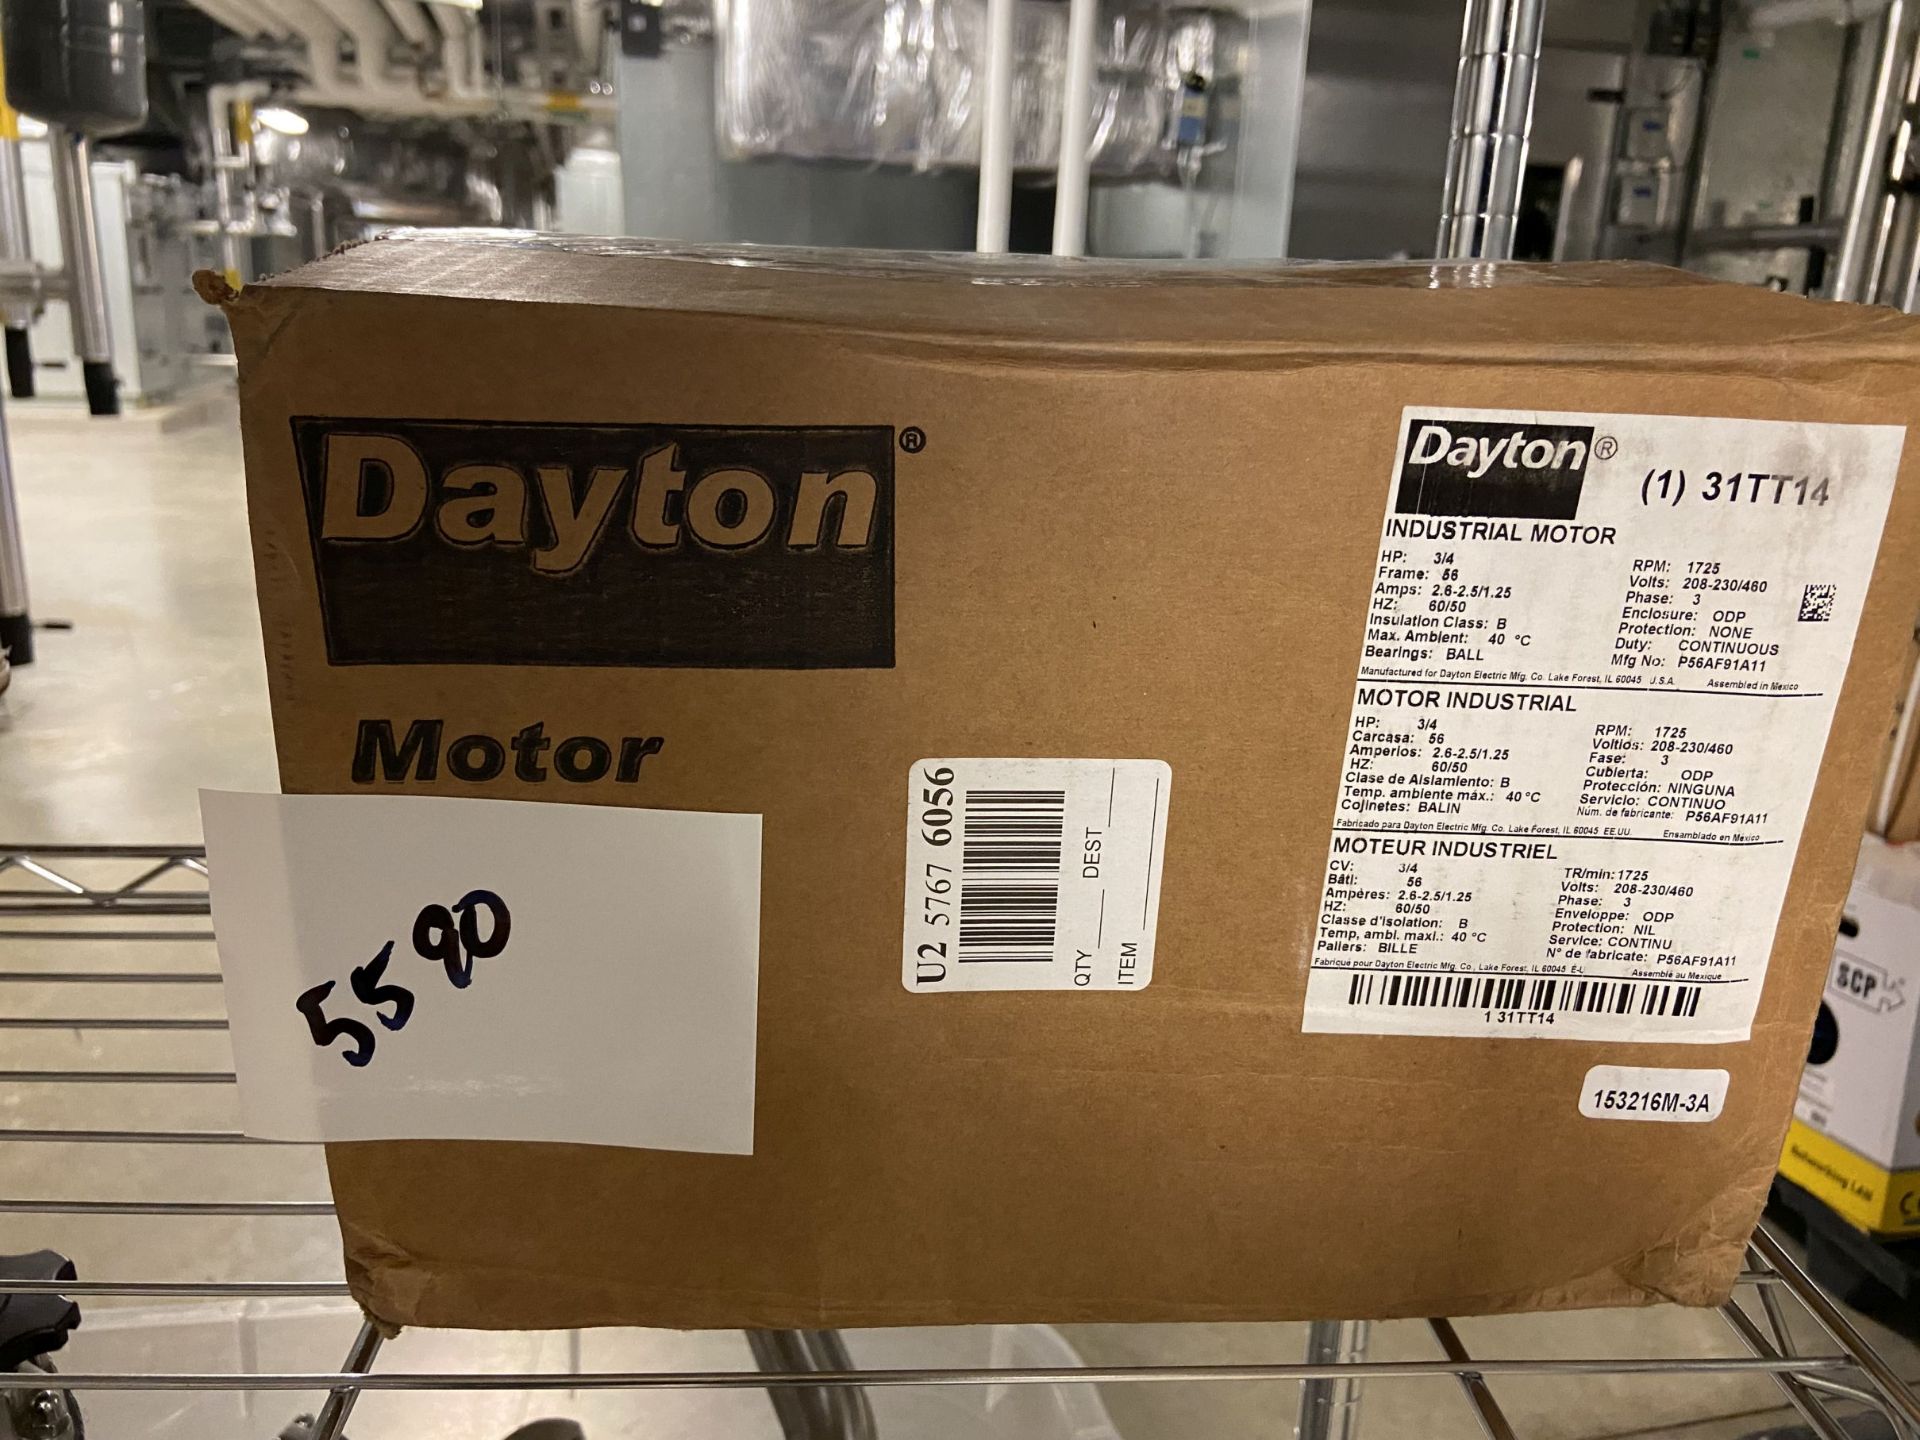 Dayton industrial motor.